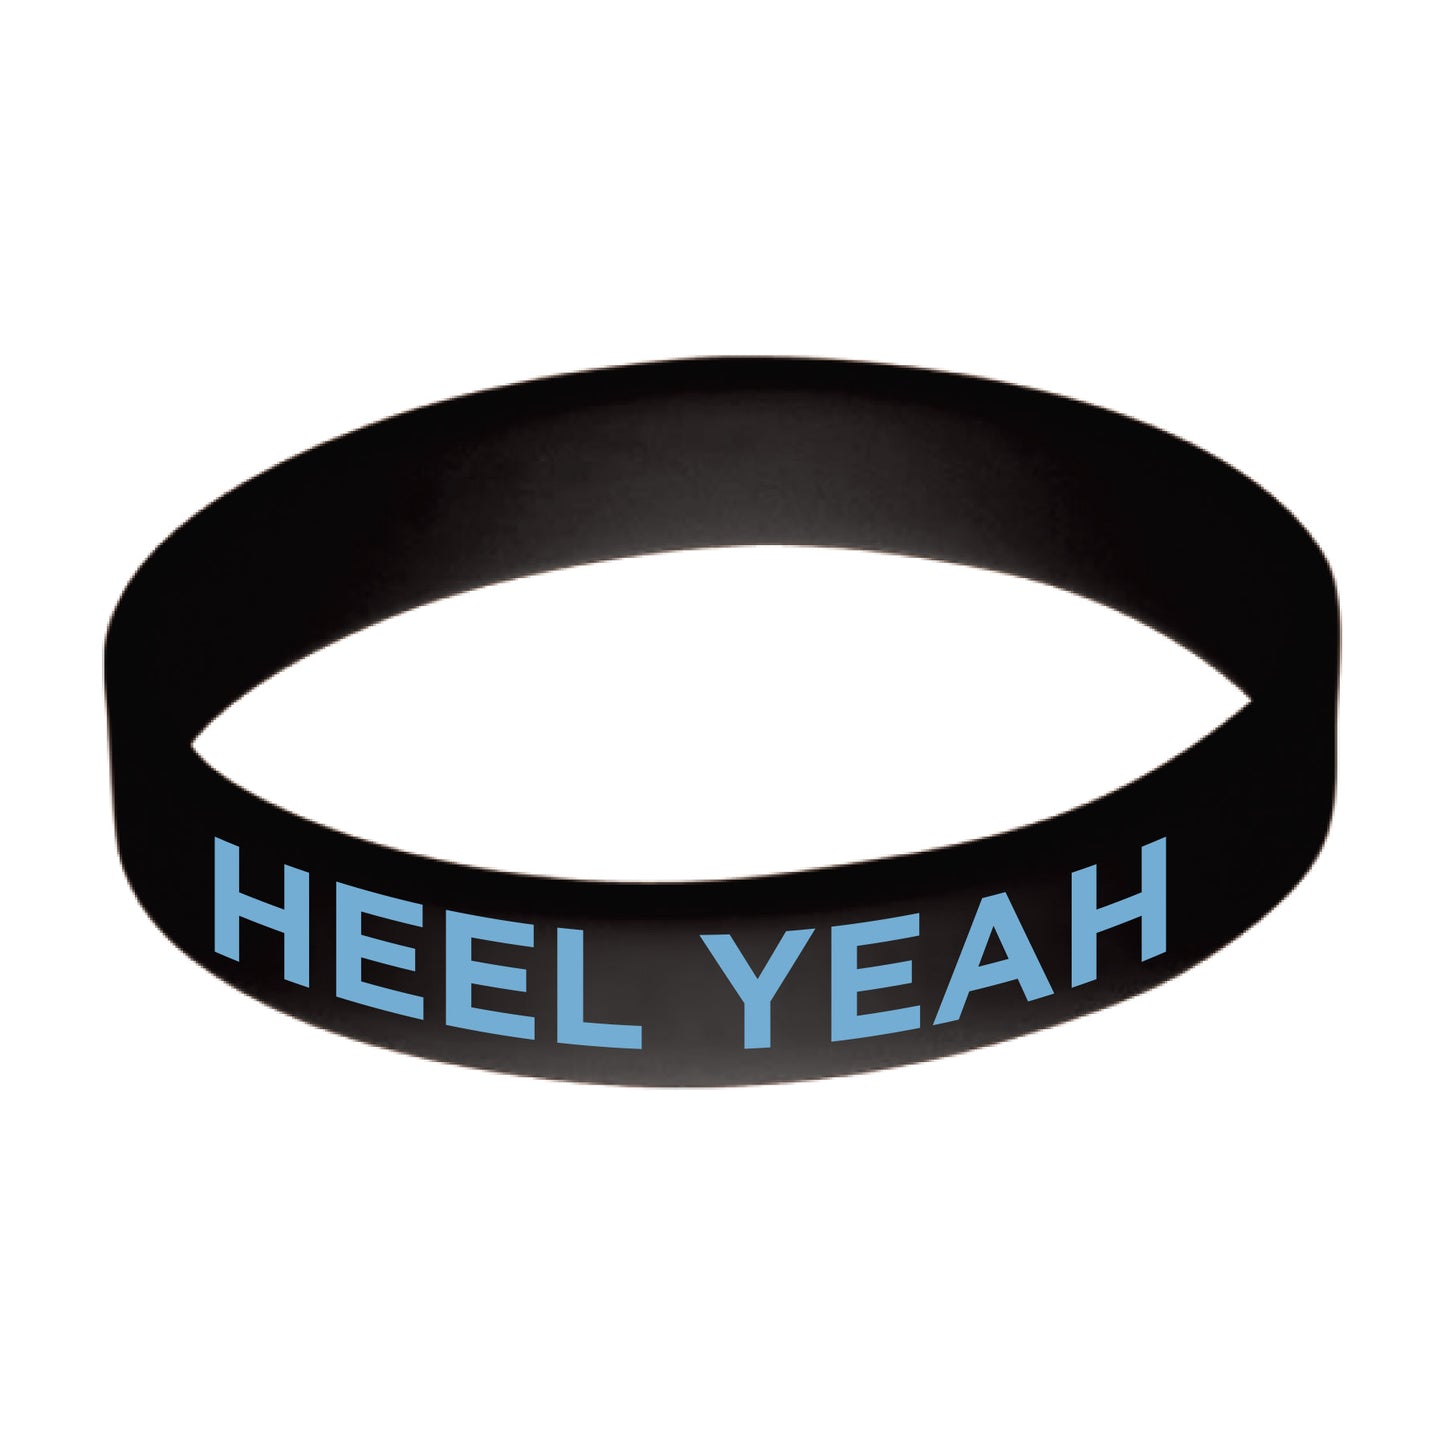 HEEL YEAH Black Rubber Wristband for Carolina Fans